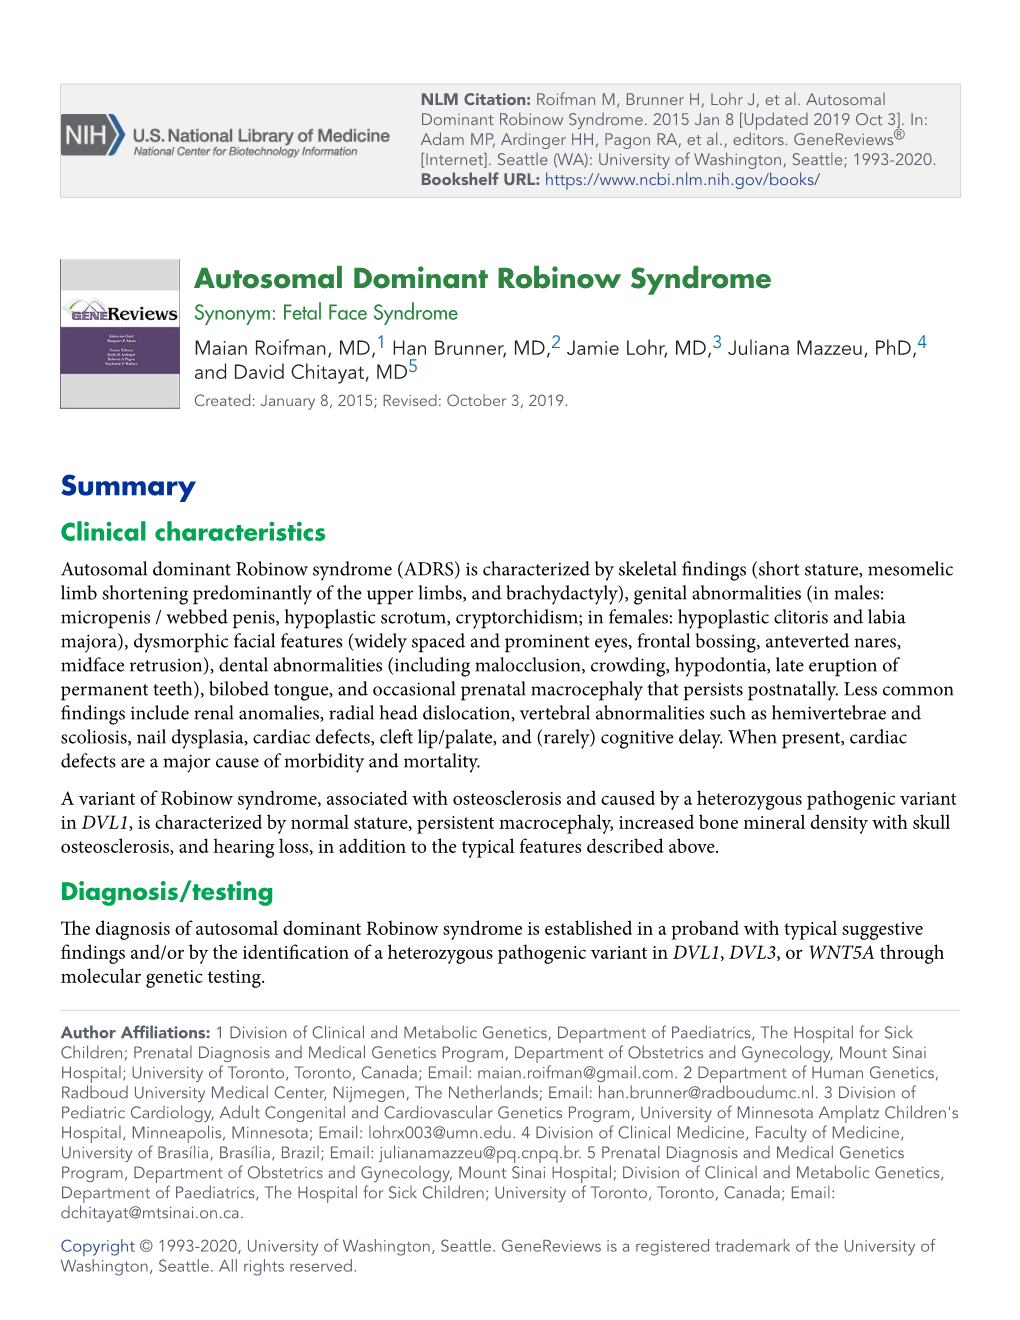 Autosomal Dominant Robinow Syndrome